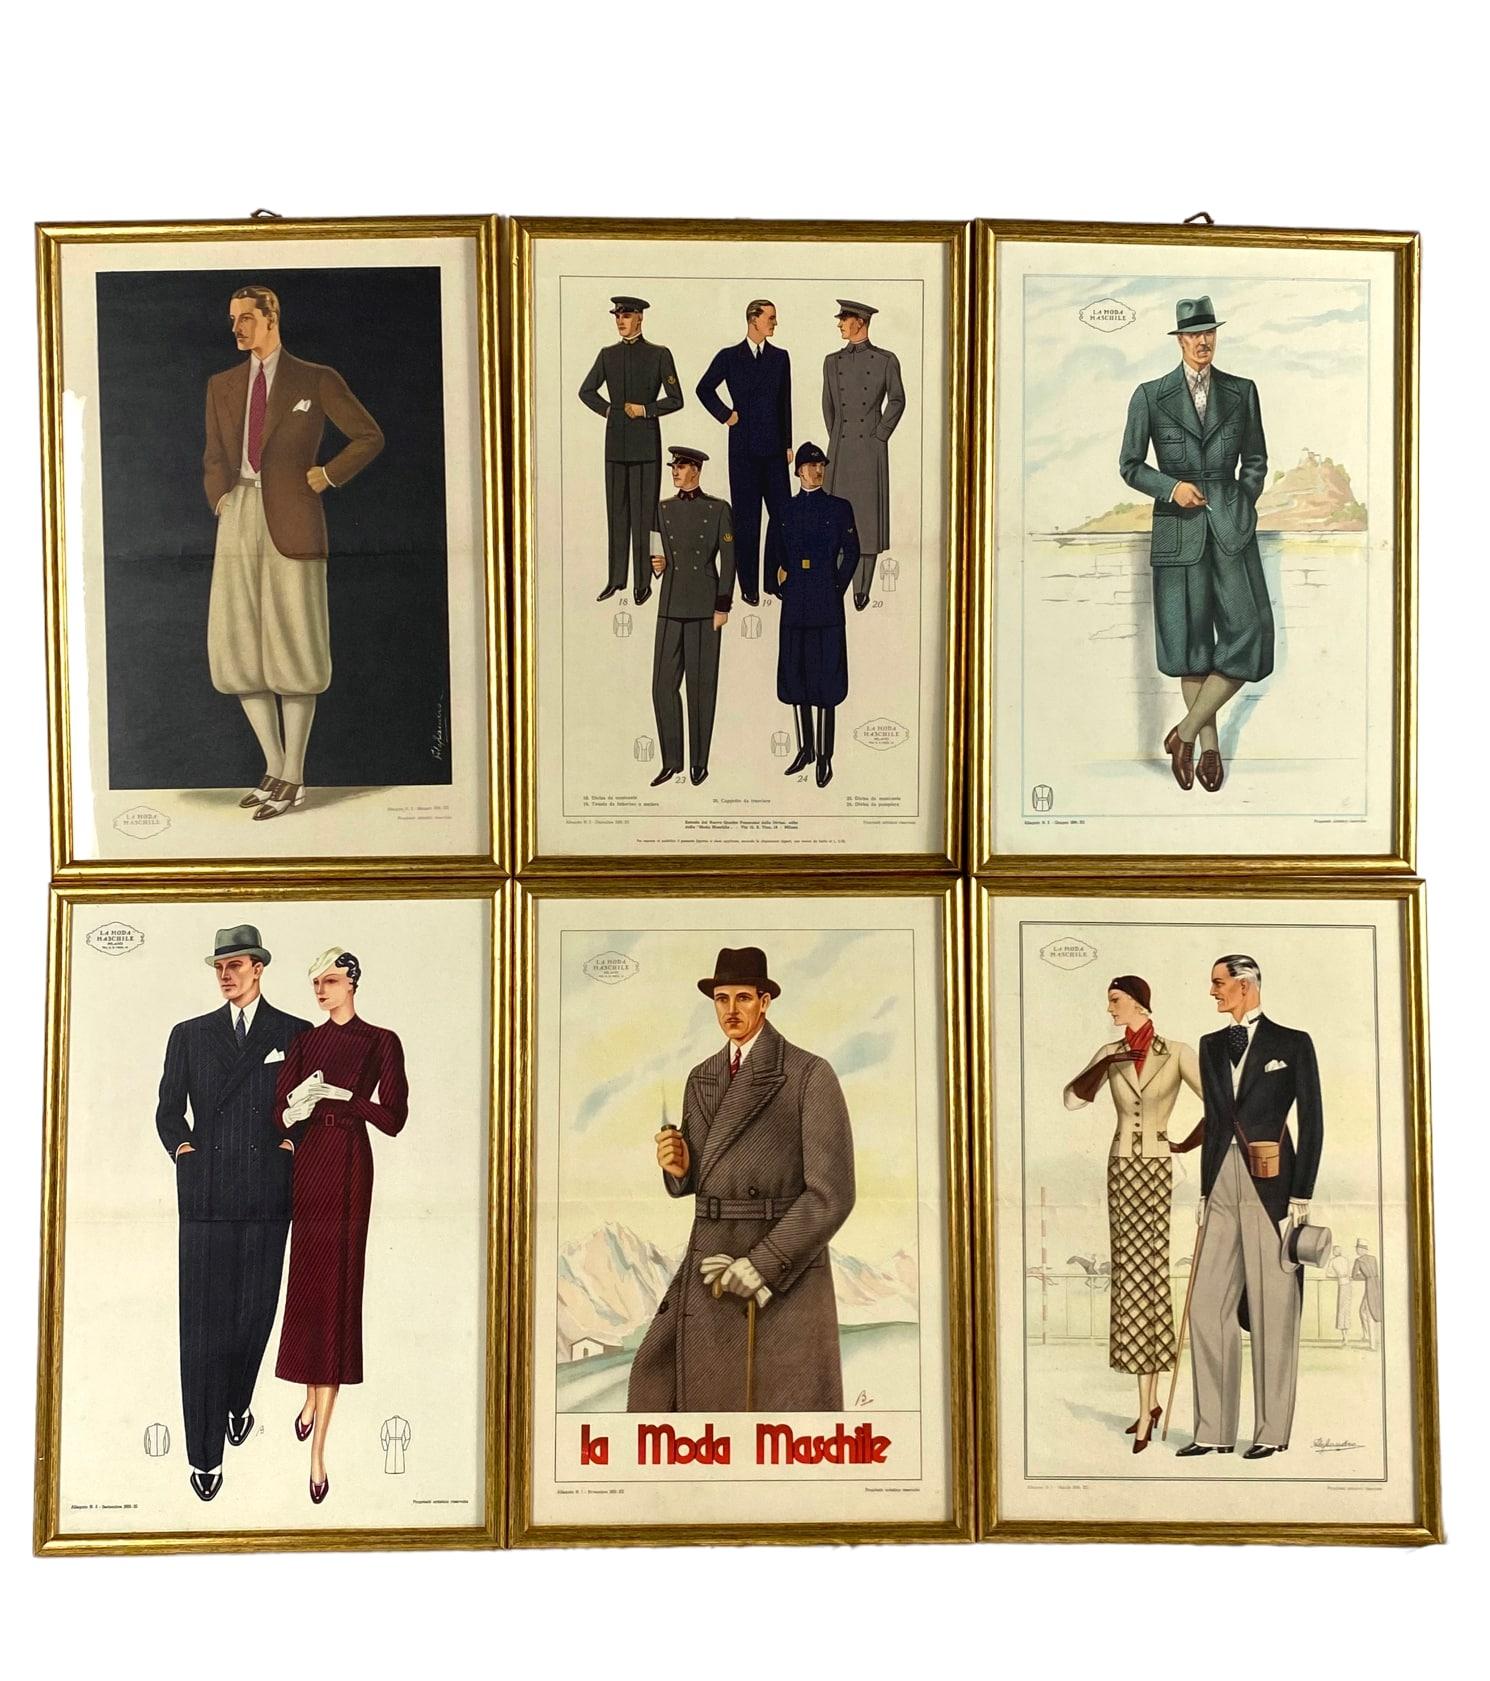 Wood 'La Moda Maschile', Set of 6 Framed Original Illustrations, Italy, 1930s For Sale